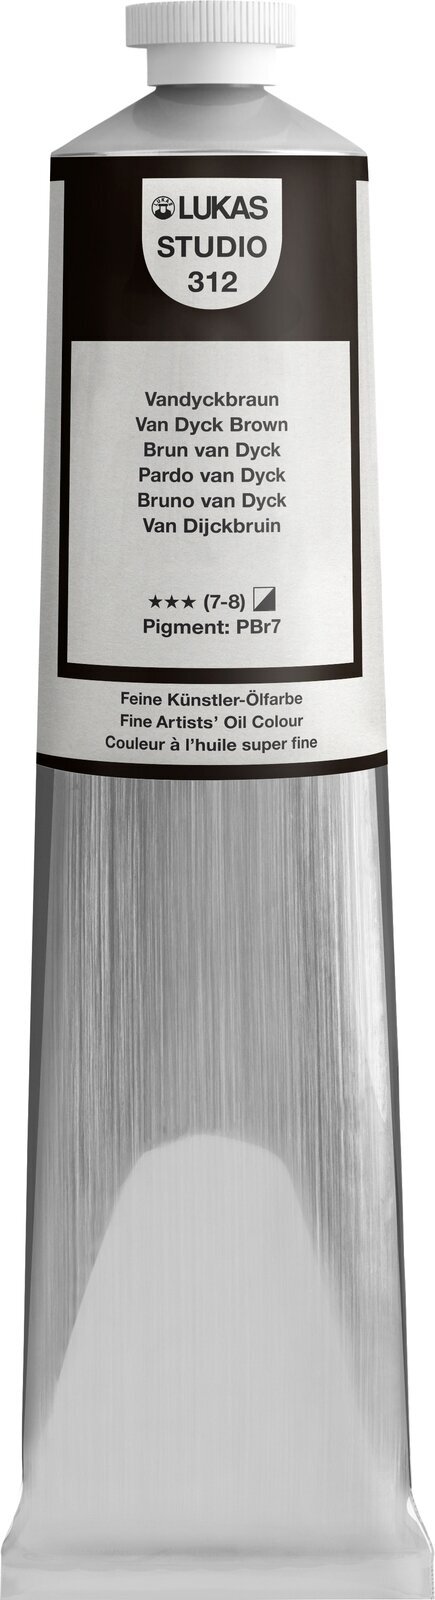 Oil colour Lukas Studio Aluminium Tube Oil Paint Van Dyck Brown 200 ml 1 pc